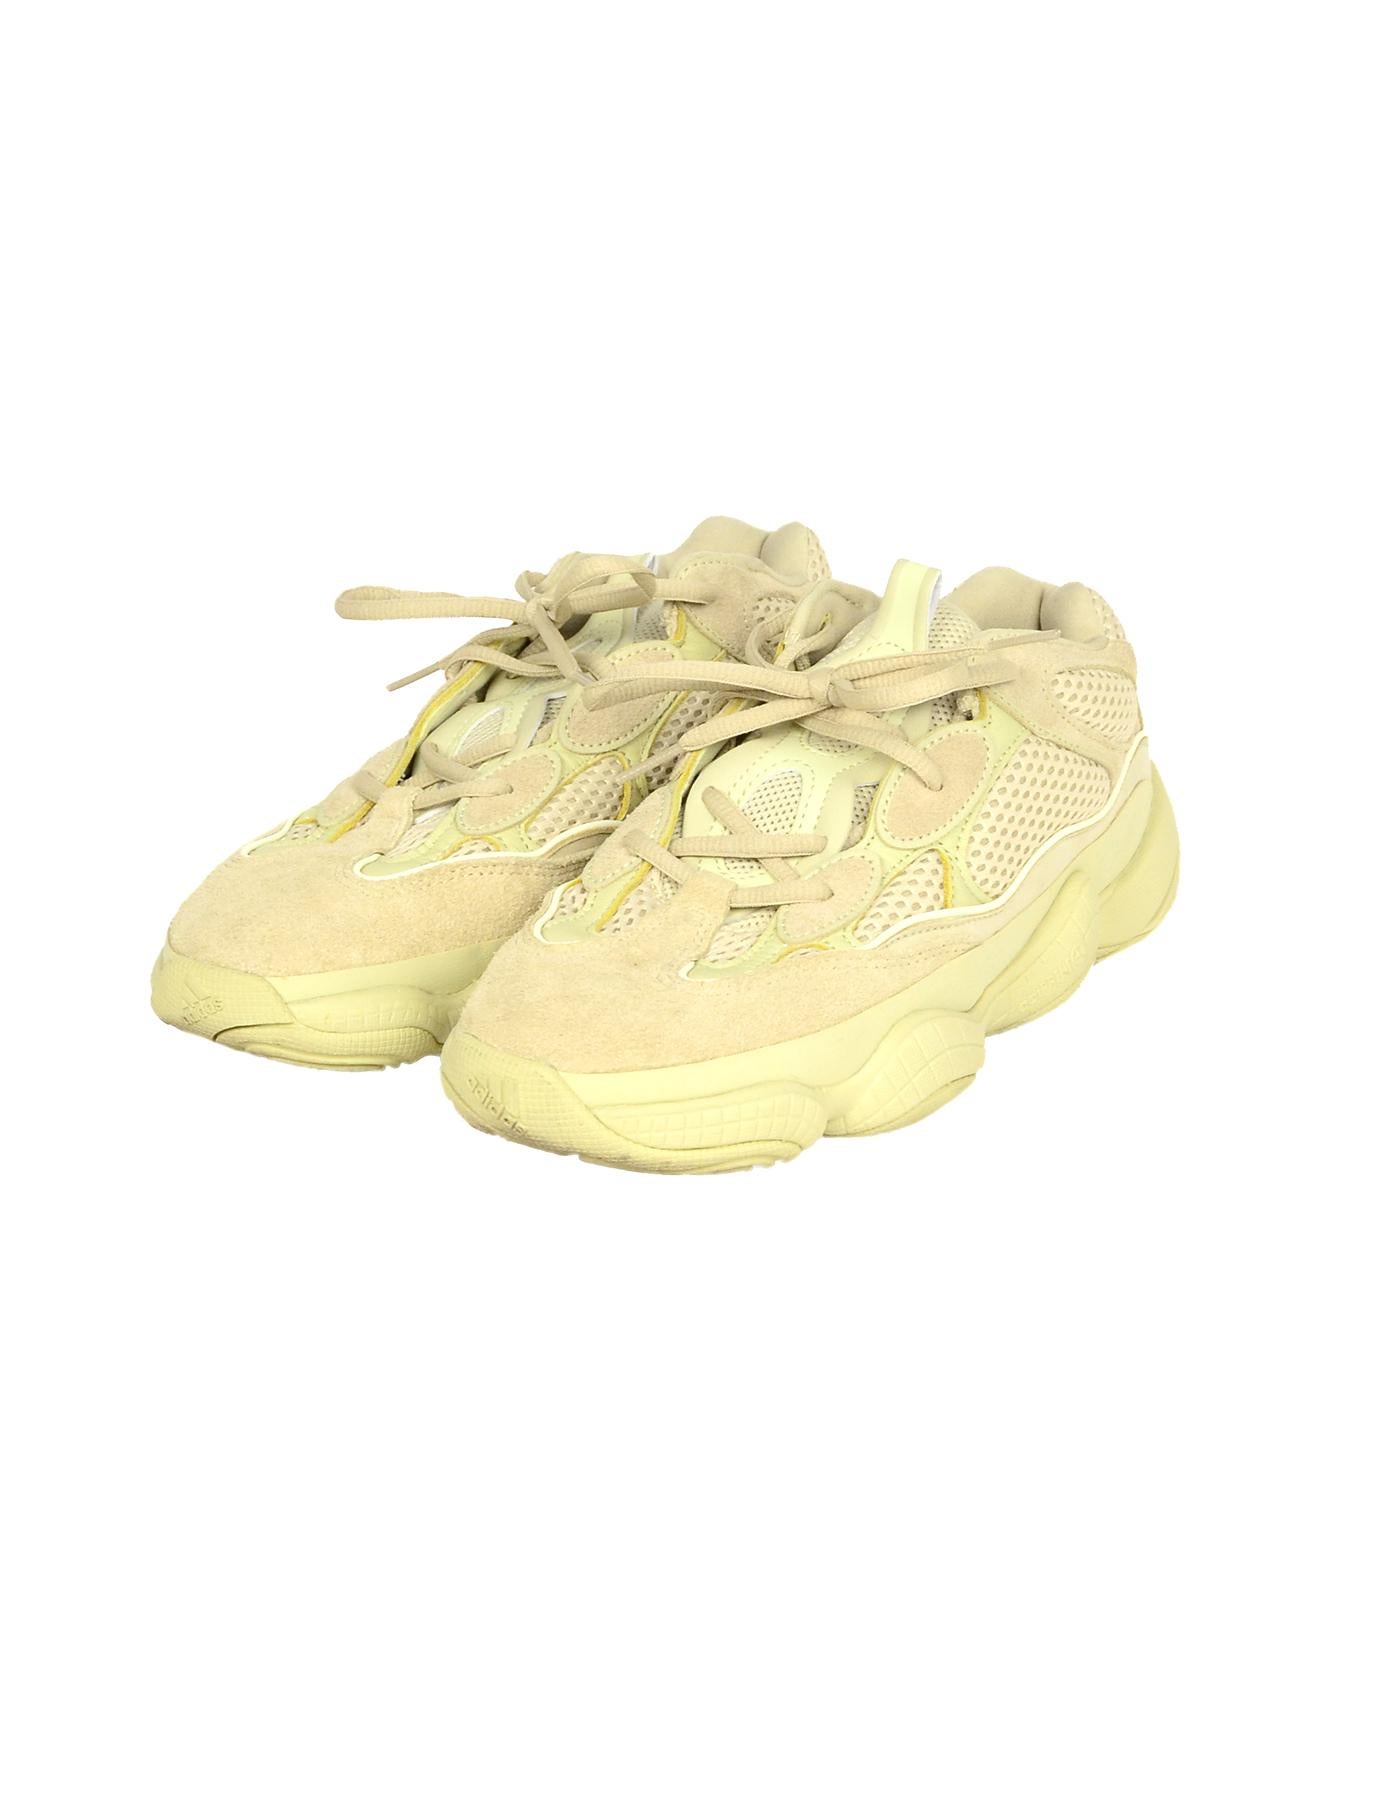 Adidas x Yeezy '18 500 Desert Rat Super Moon Yellow Tint Sneakers Sz M 7, W 8.5 (Gelb)